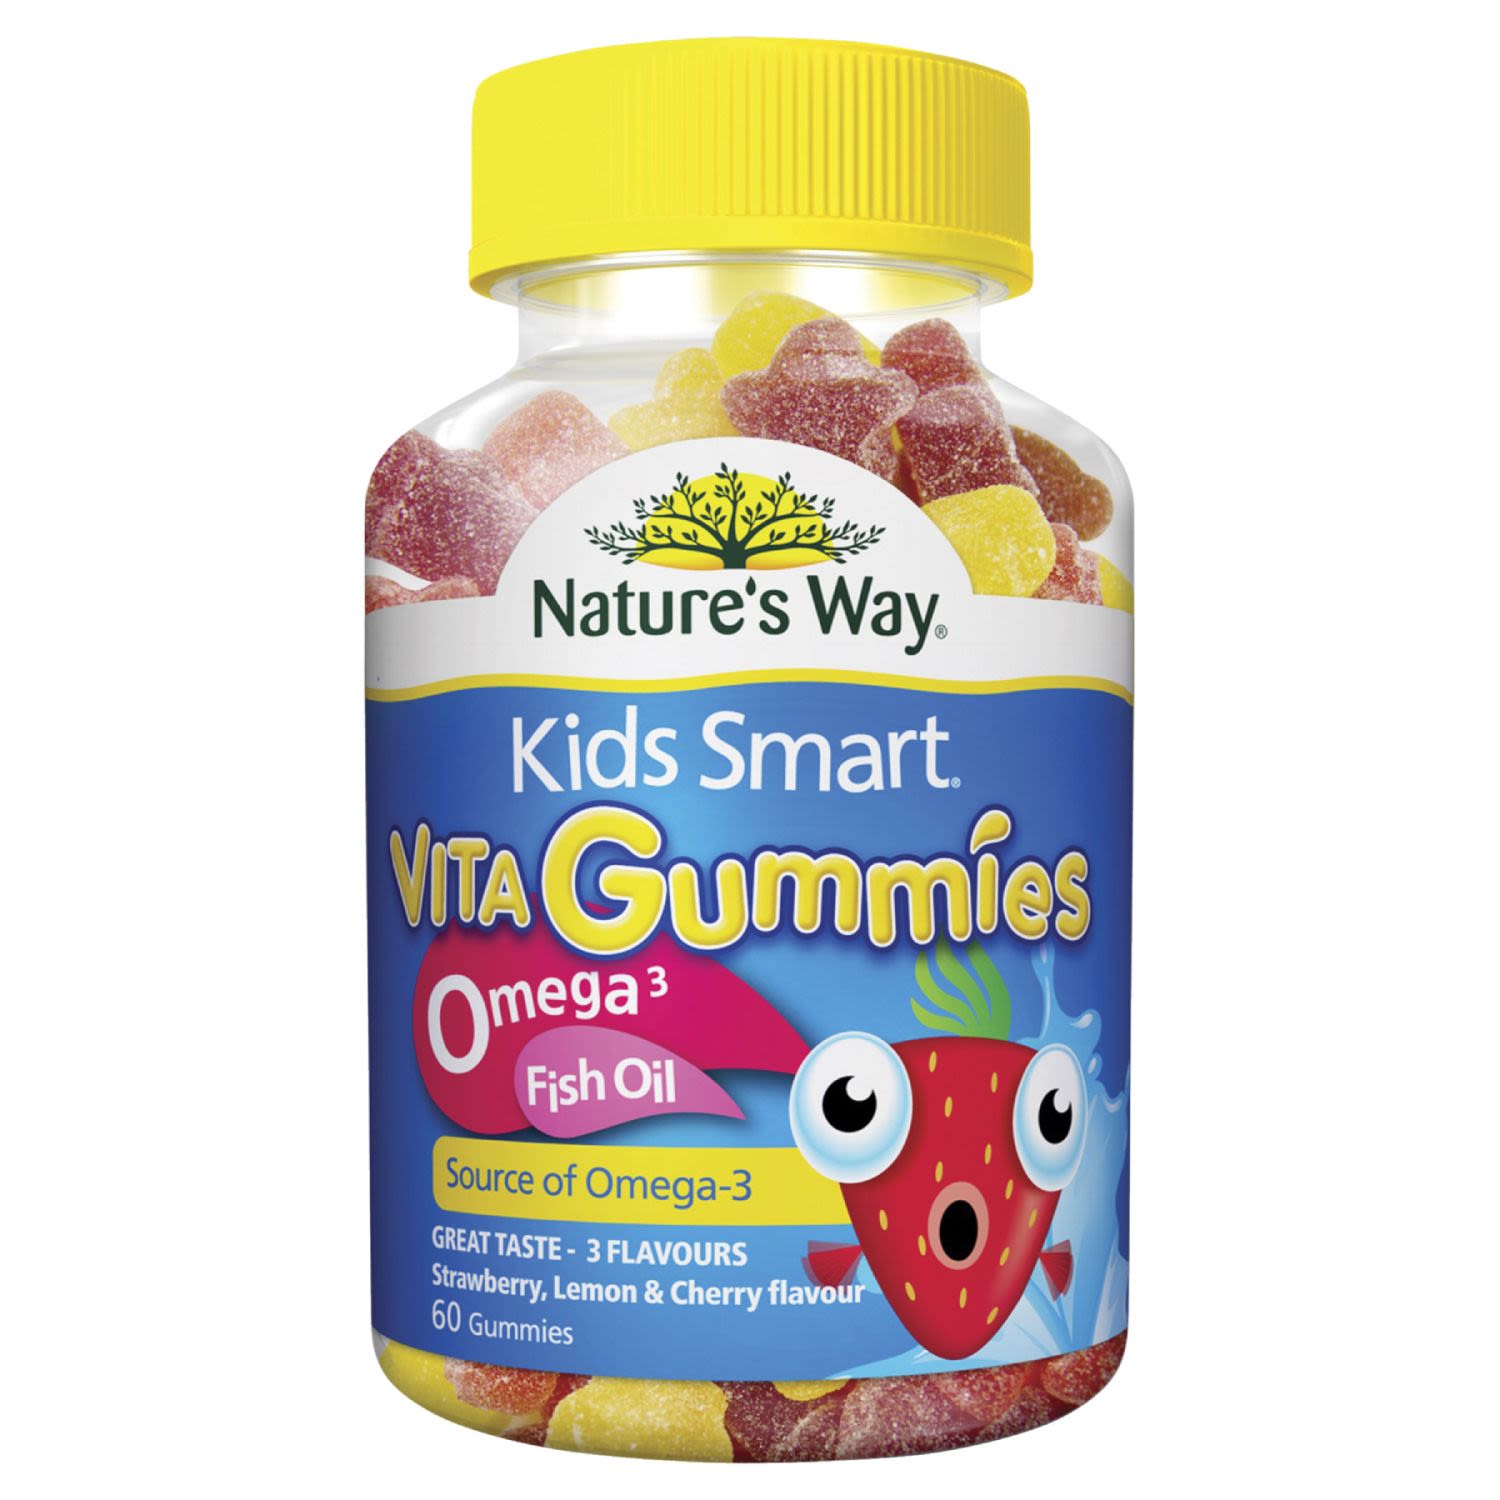 Kids Smart Vita Gummies Omega-3 Fish Oil, 60 Each